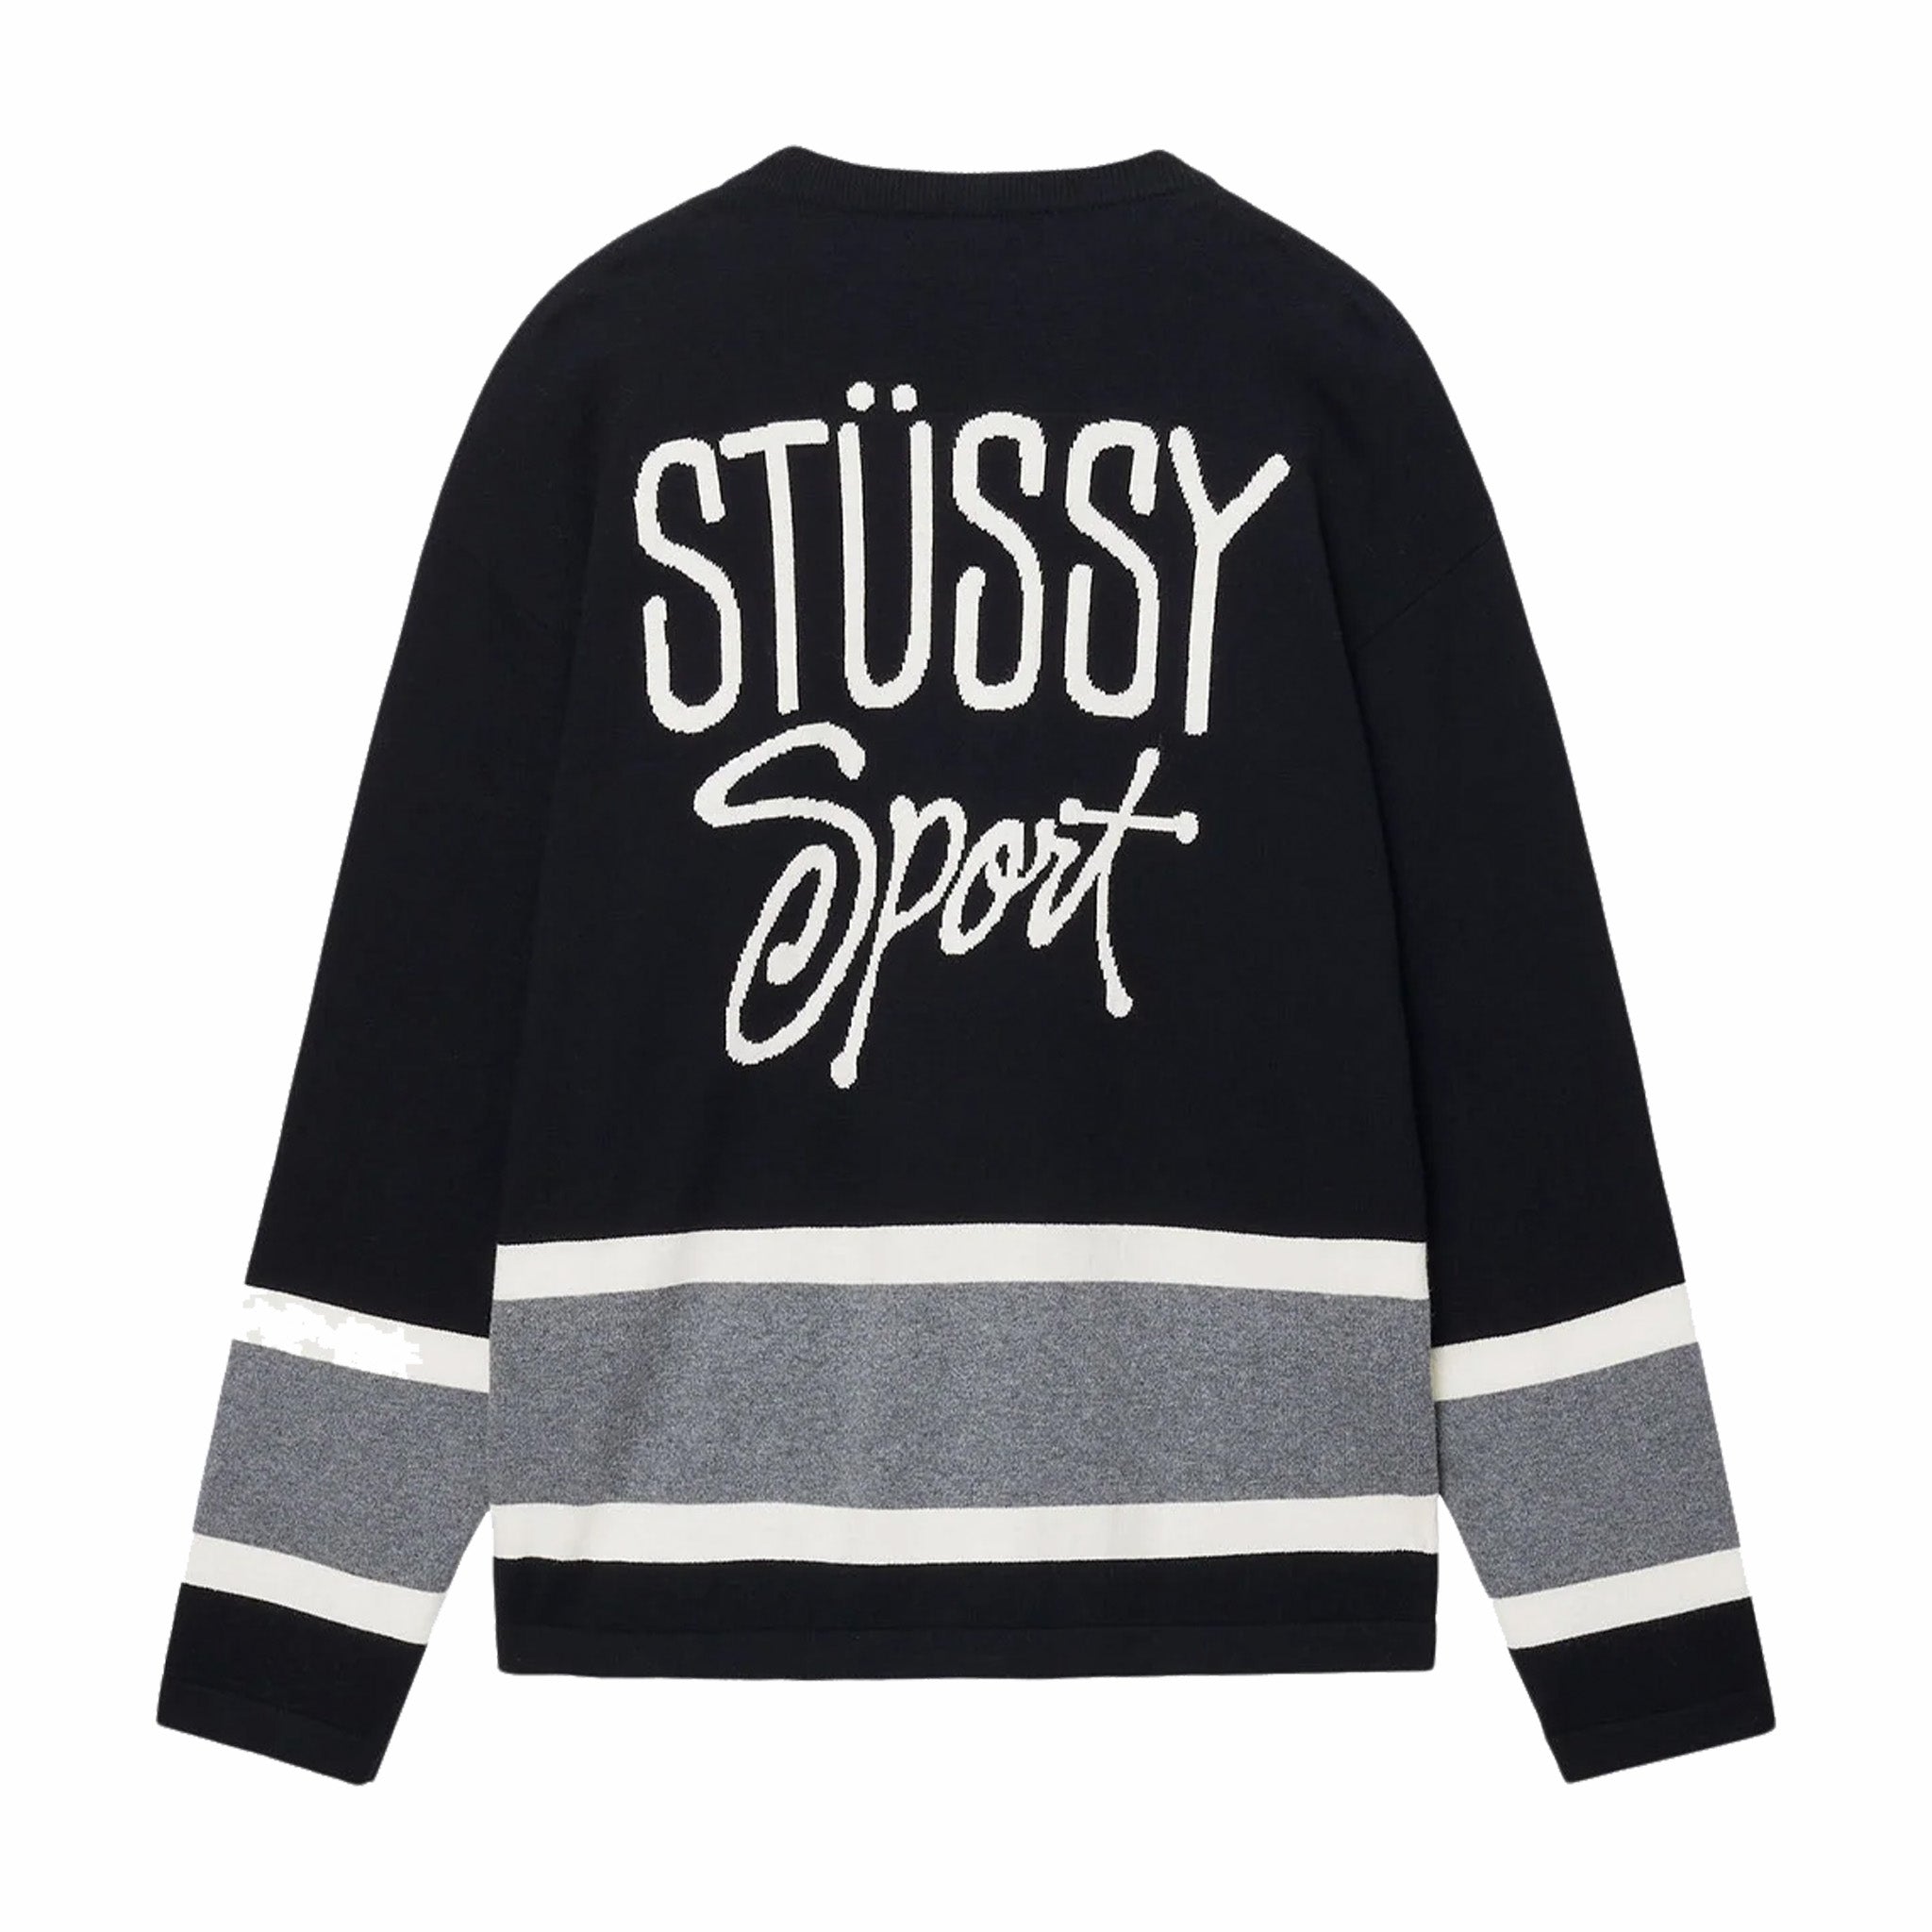 Stüssy Hockey Sweater (Black) - August Shop